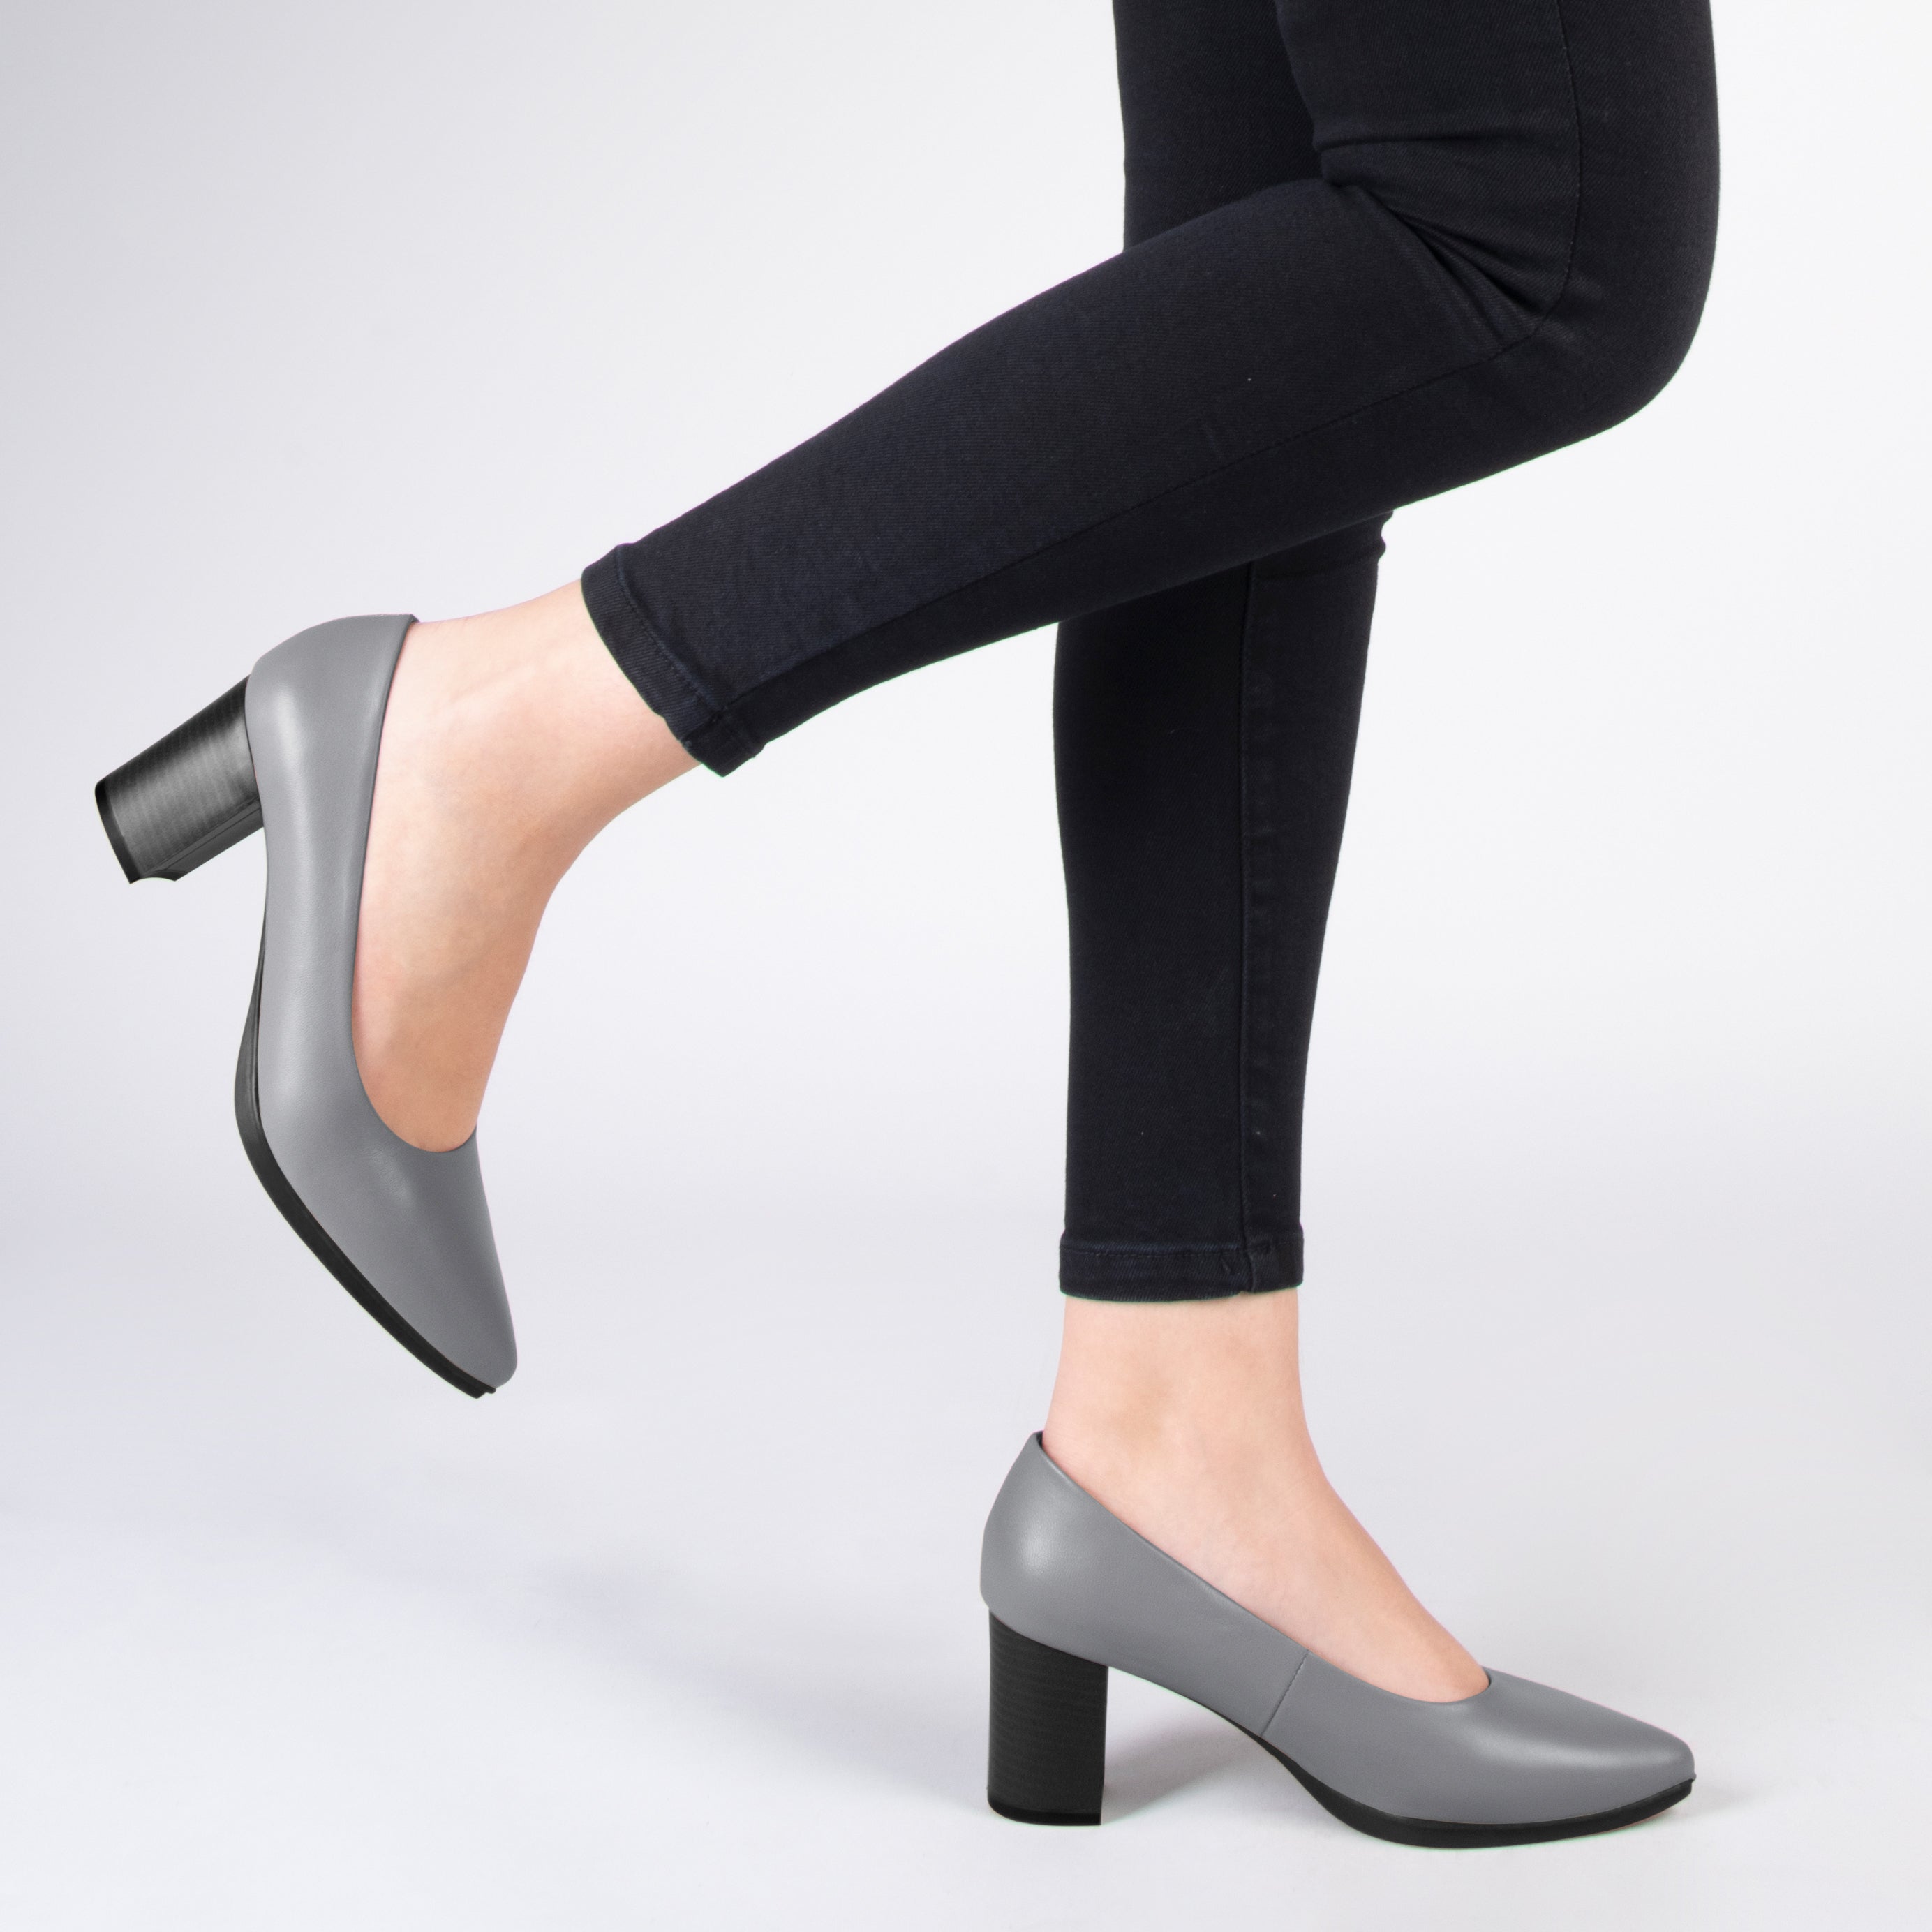 URBAN S SALON – Zapatos de tacón medio de napa GRIS